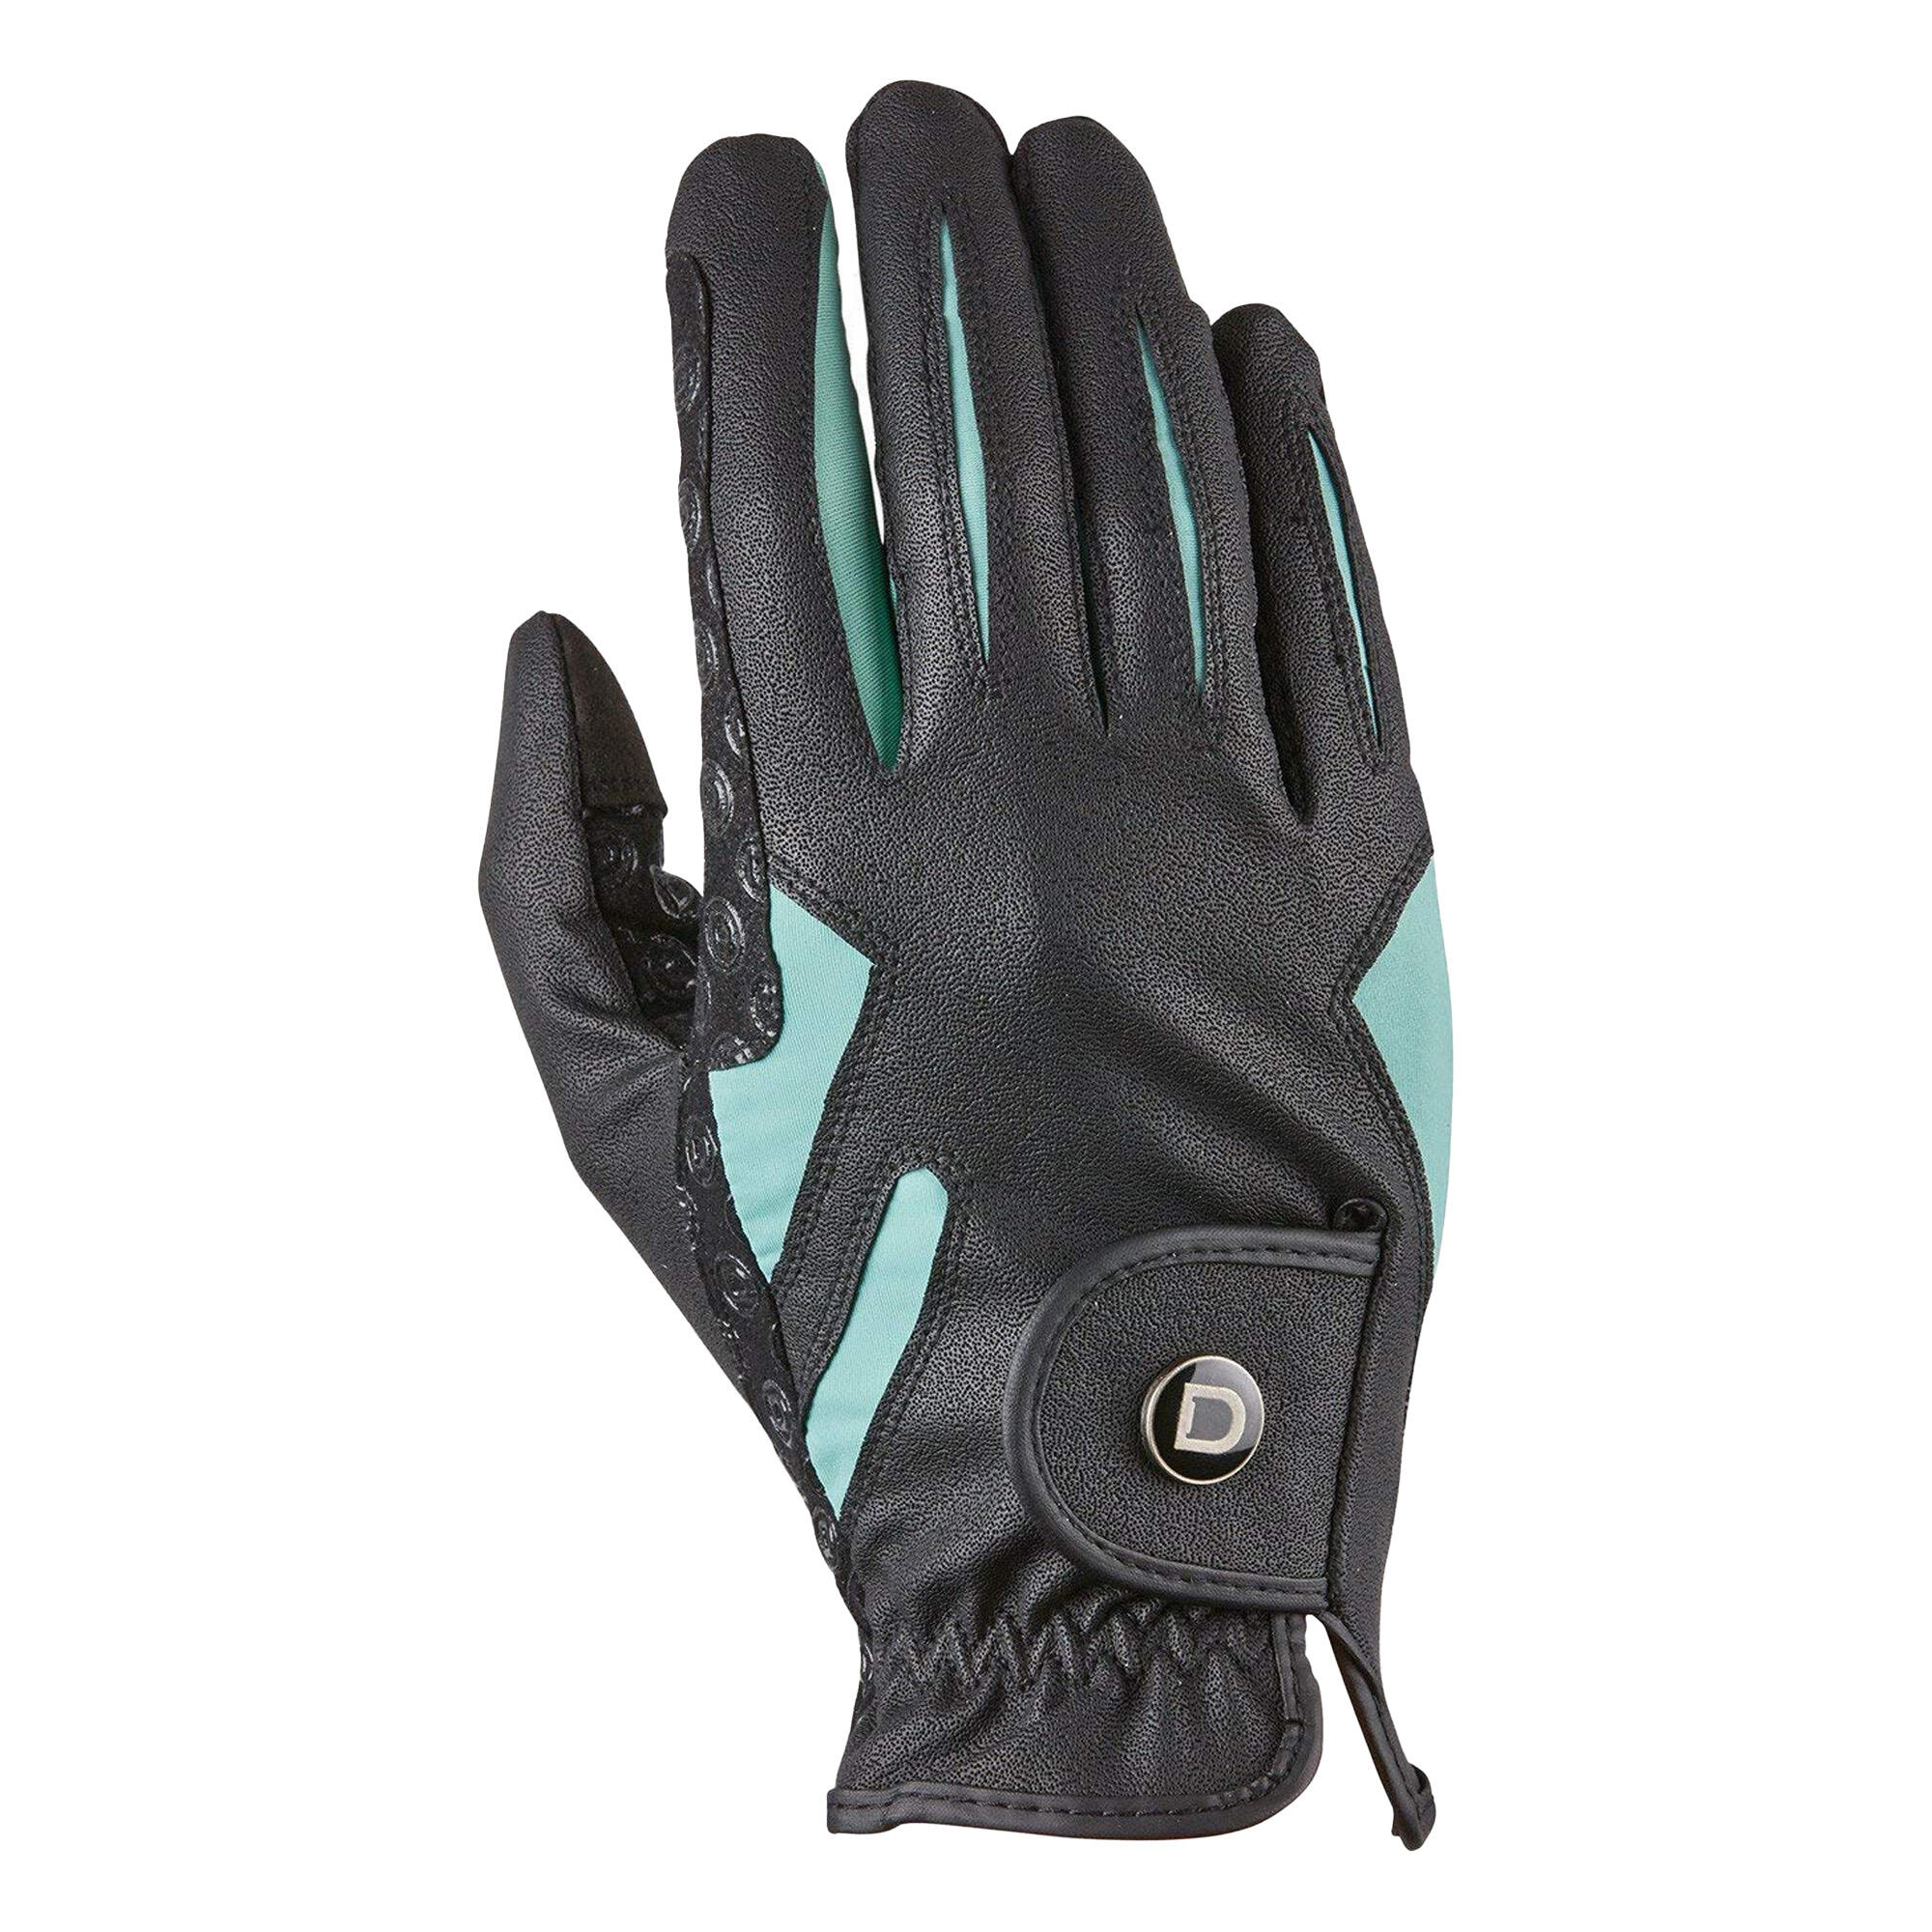 DUBLIN Unisex Coolit Gel Touch Fastening Riding Gloves (Black/Teal)